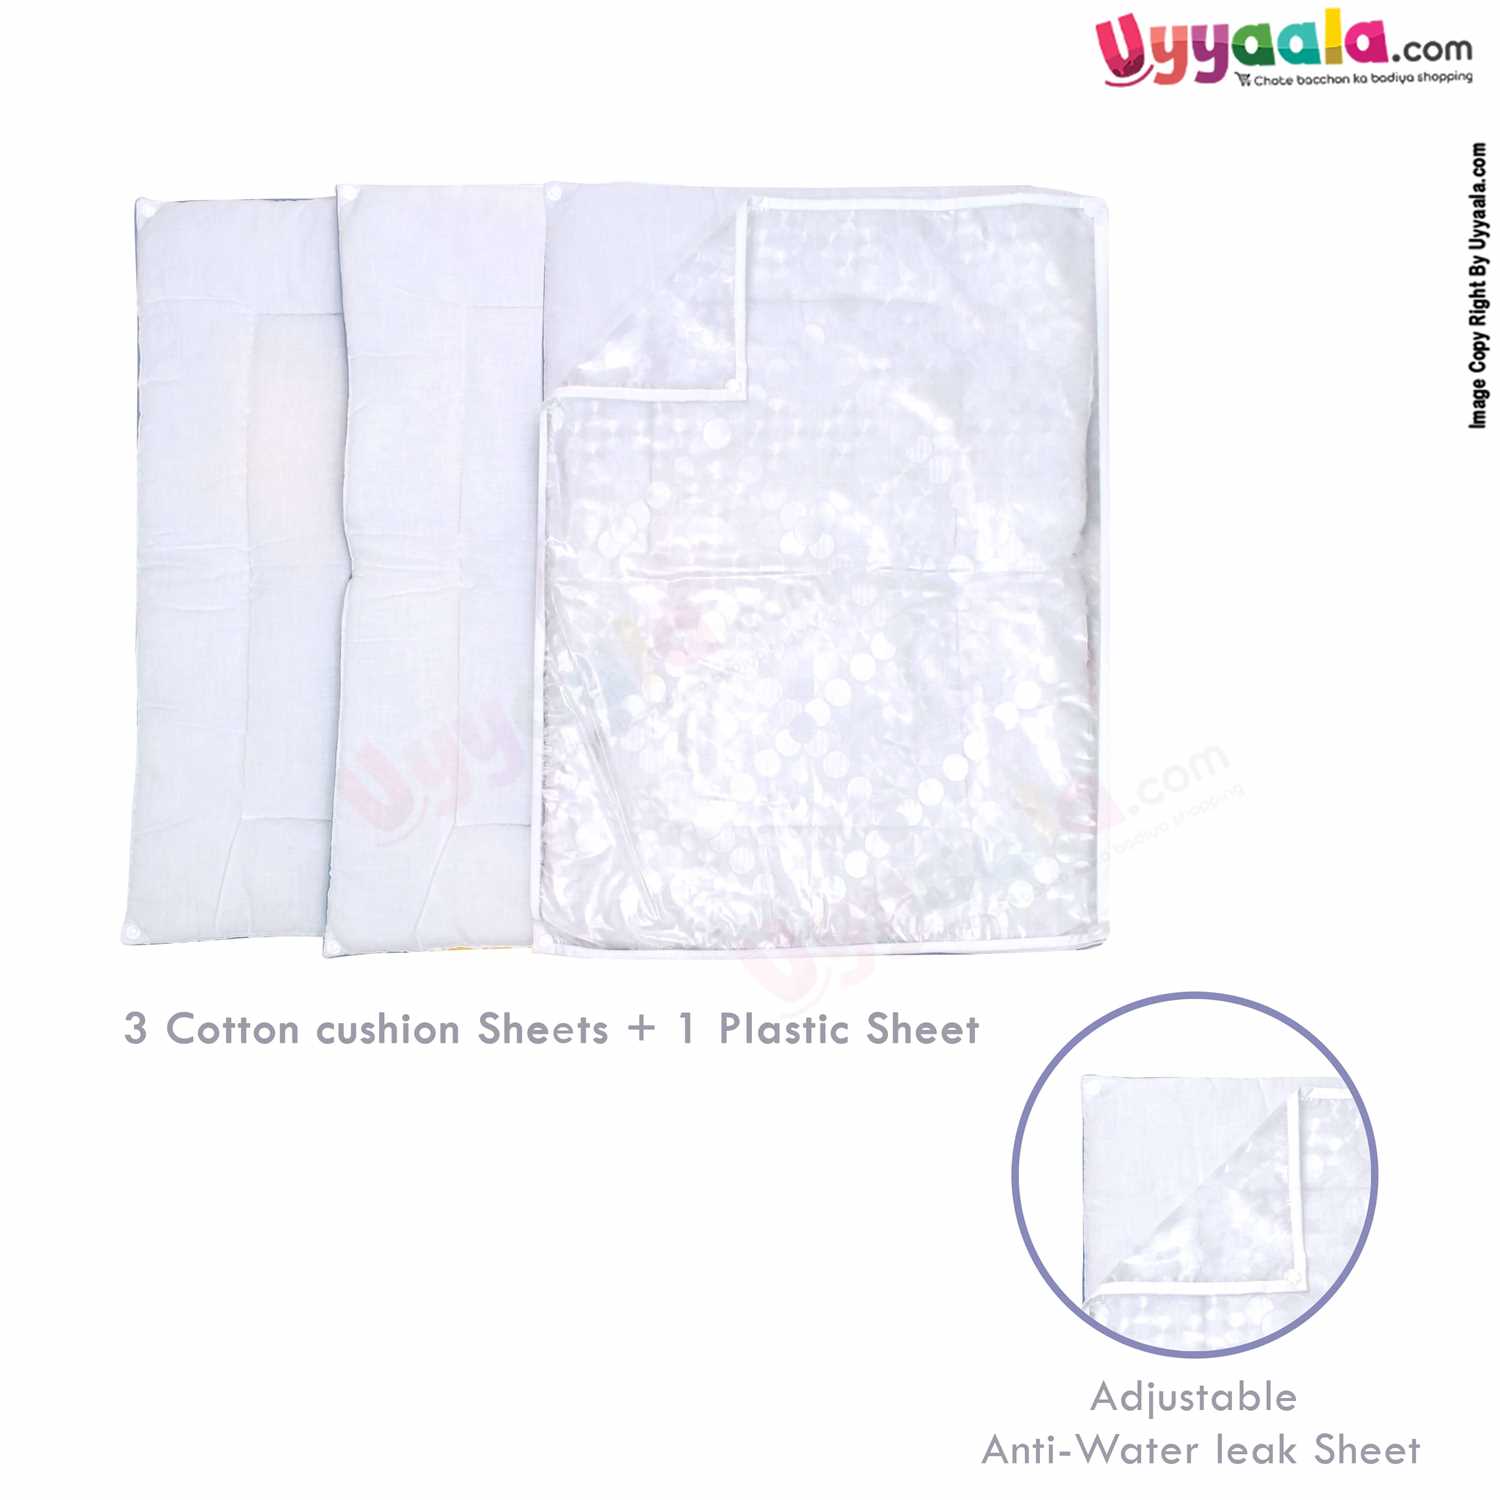 Num Num Cotton Foam Cushioned & Plastic detachable Changing Sheets 3+1 Set with Stars Print - Blue